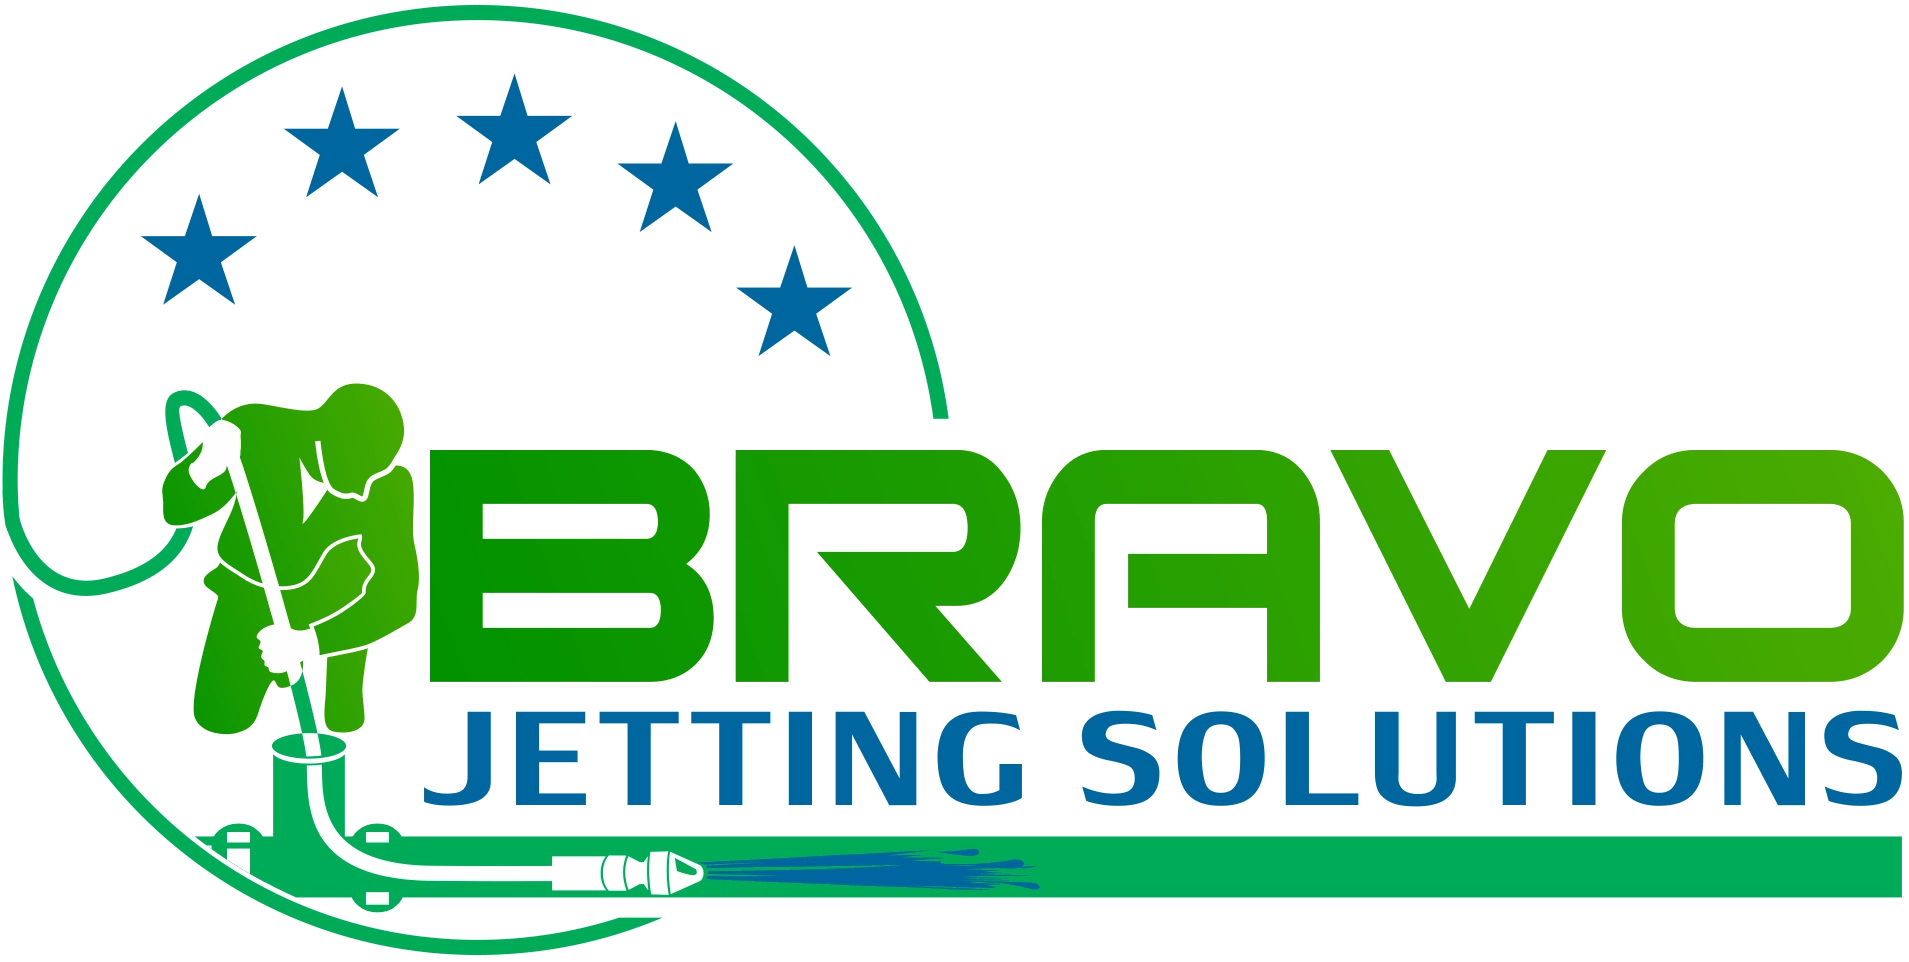 Bravo Jetting Solutions Logo